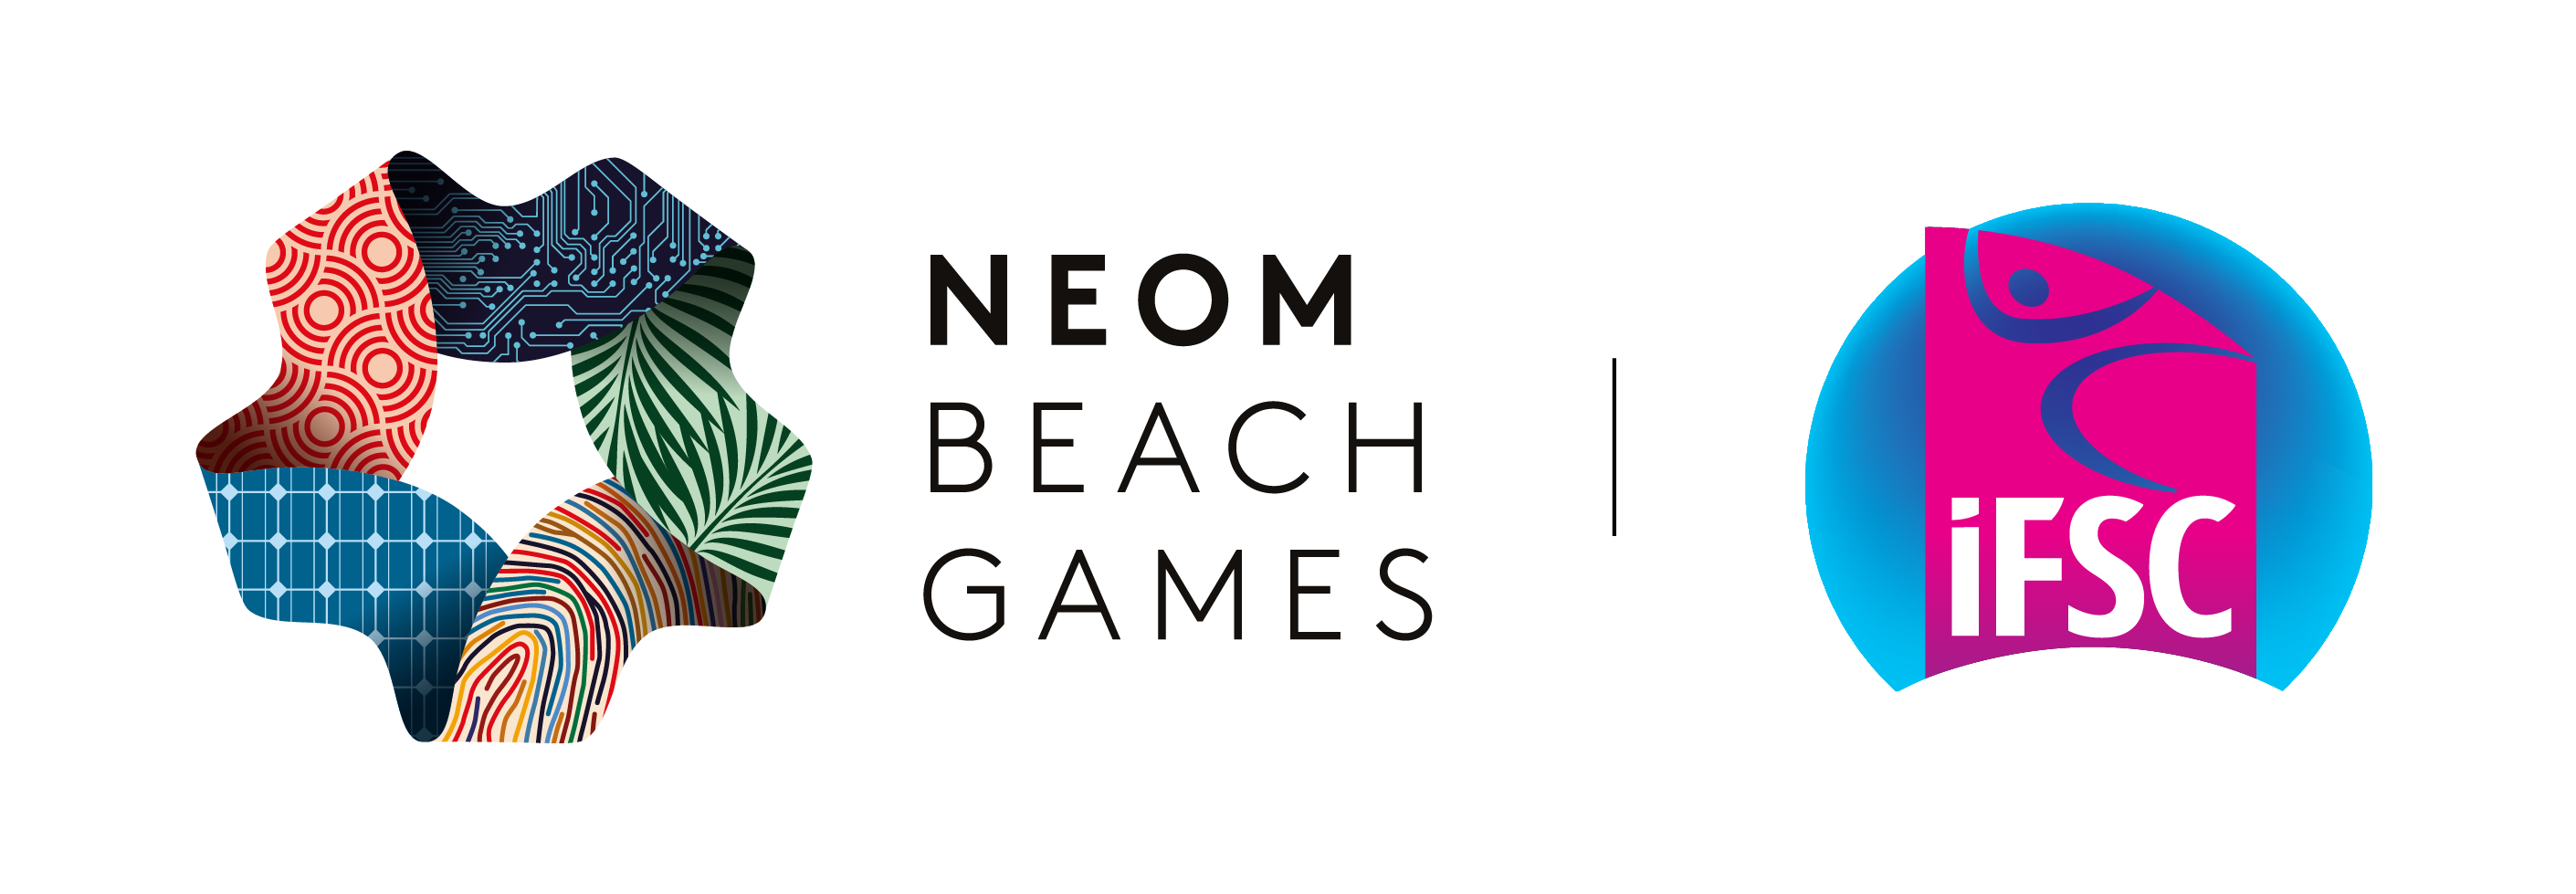 beach games including logo ifsc